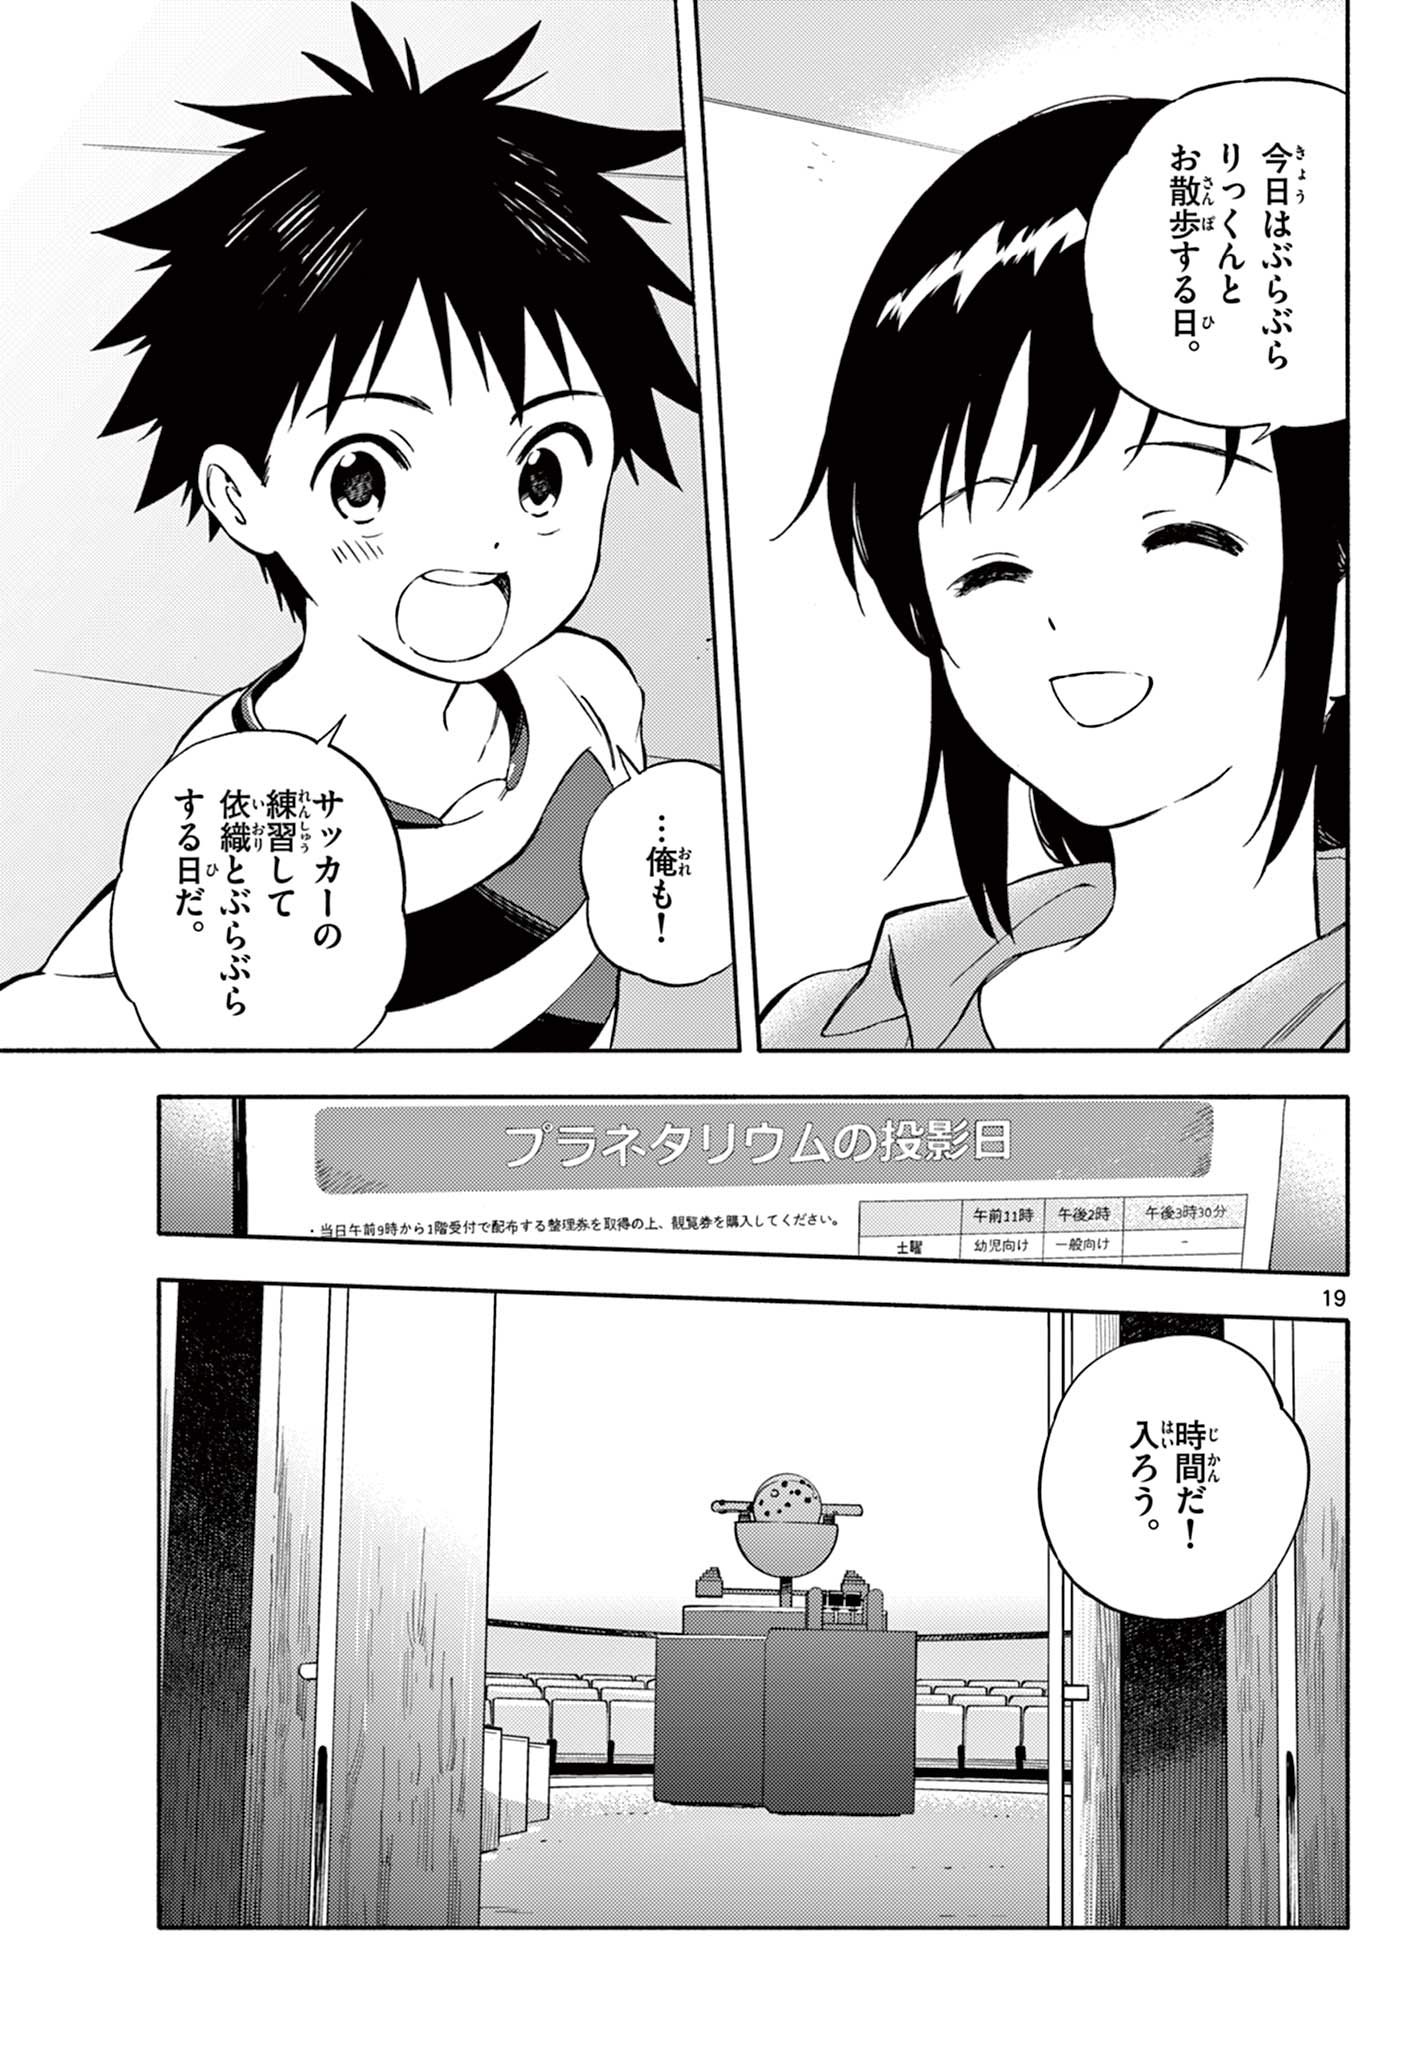 Nami no Shijima no Horizont - Chapter 15.2 - Page 4